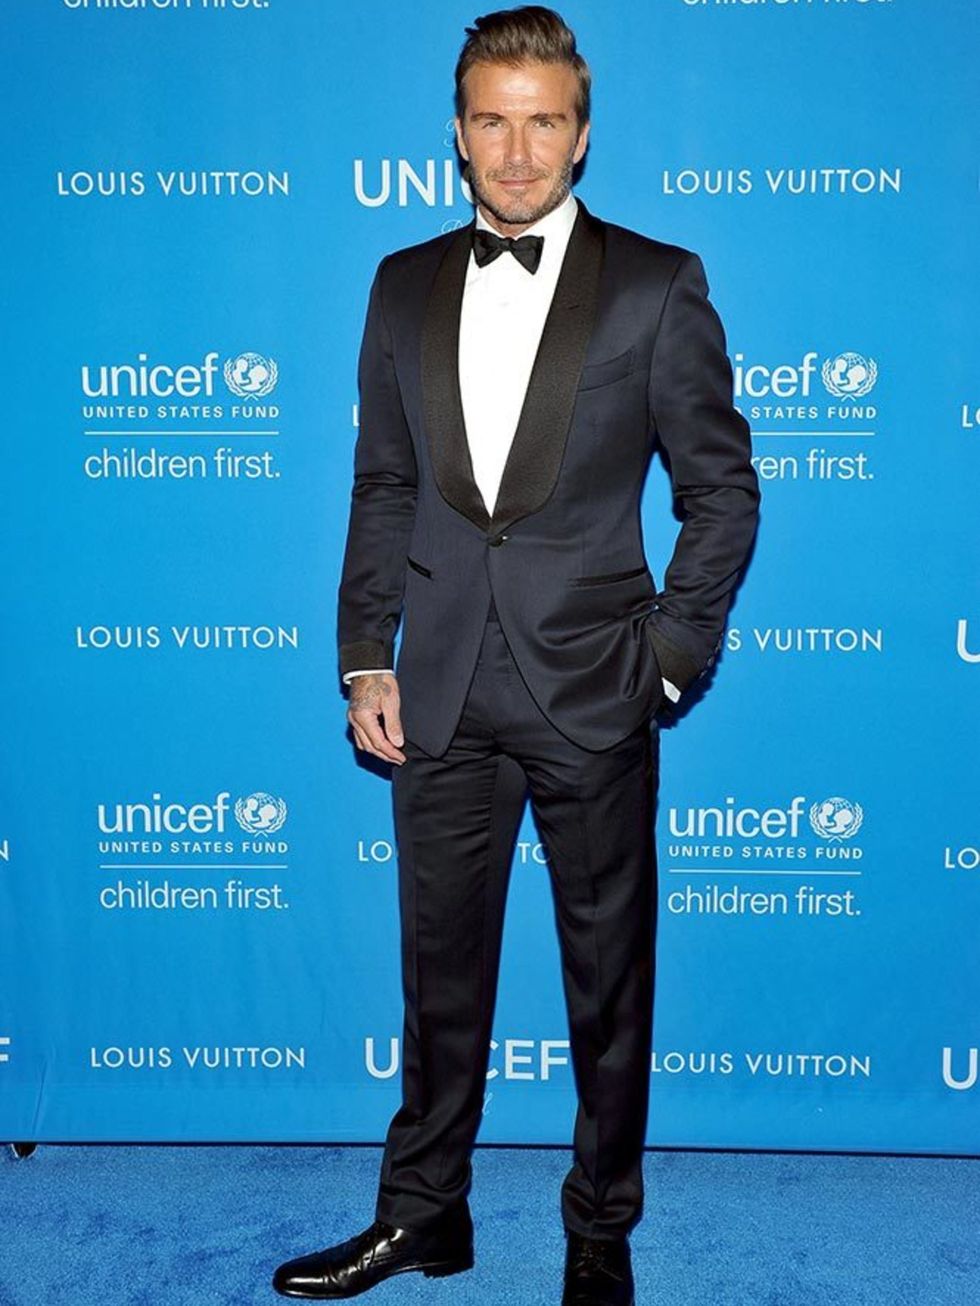 Louis Vuitton for UNICEF - LVP Intellectual Property Team